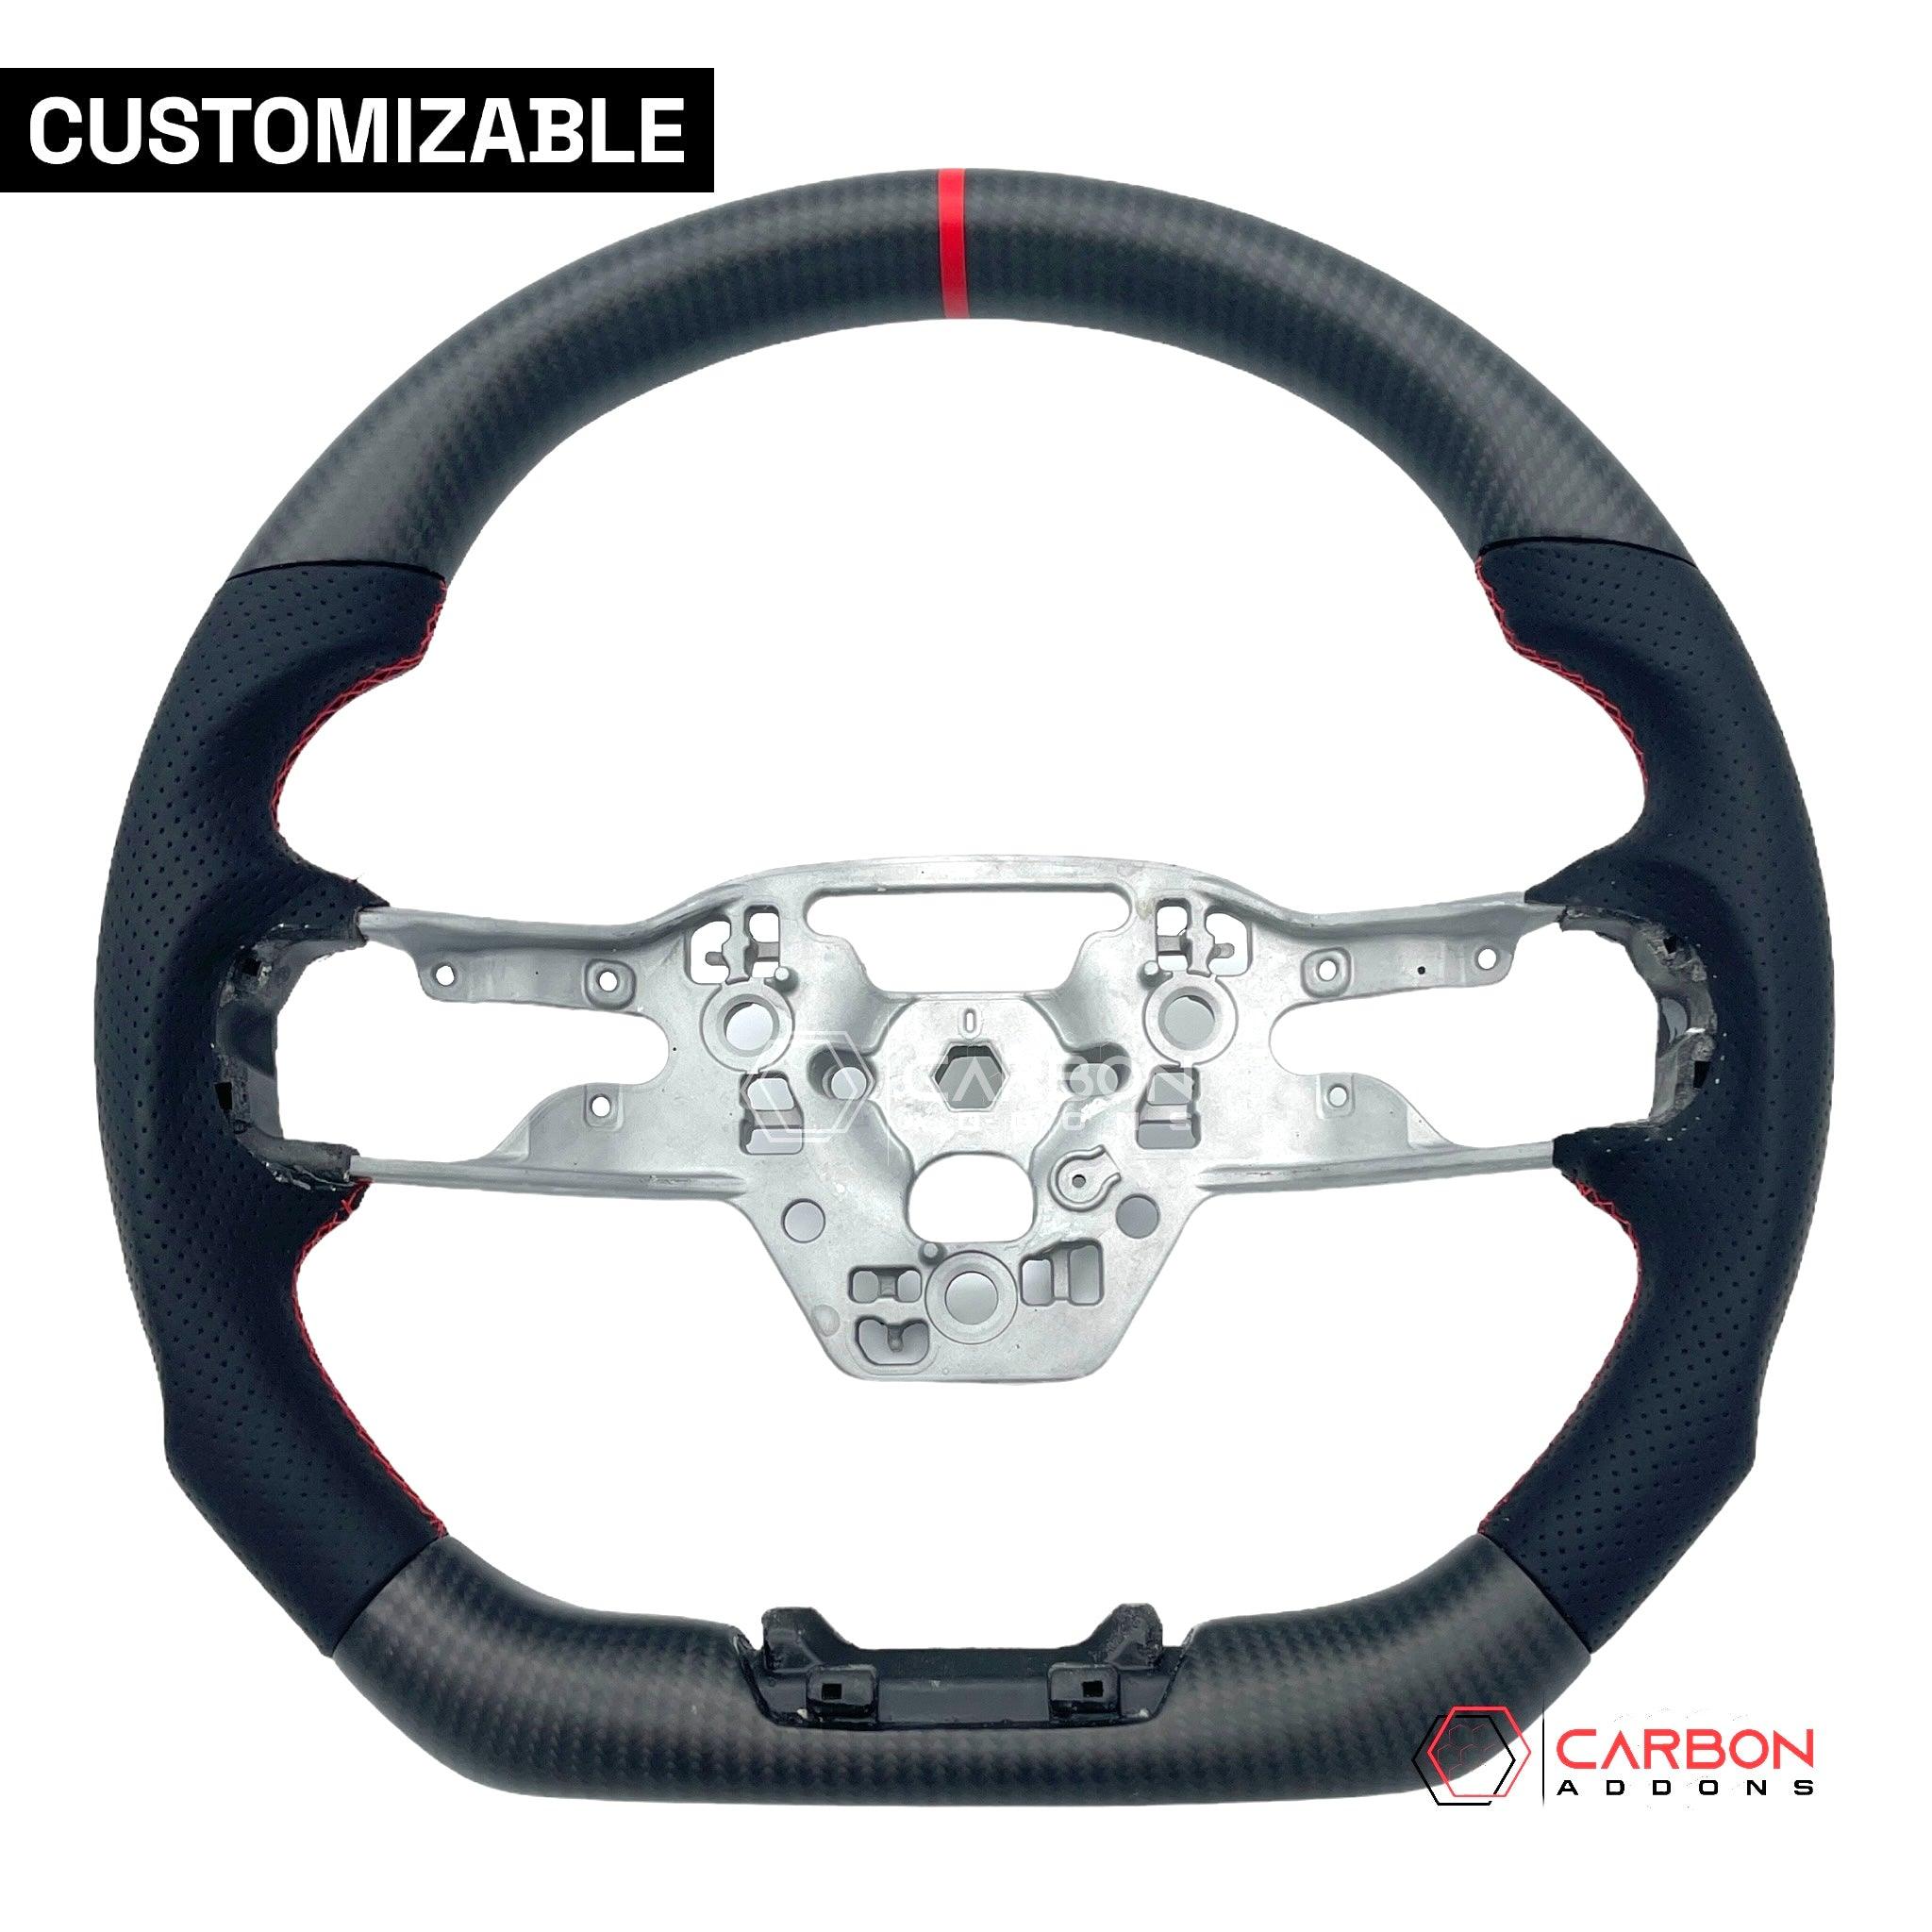 2024 Mustang Customizable Carbon Fiber Steering Wheel - carbonaddons Carbon Fiber Parts, Accessories, Upgrades, Mods